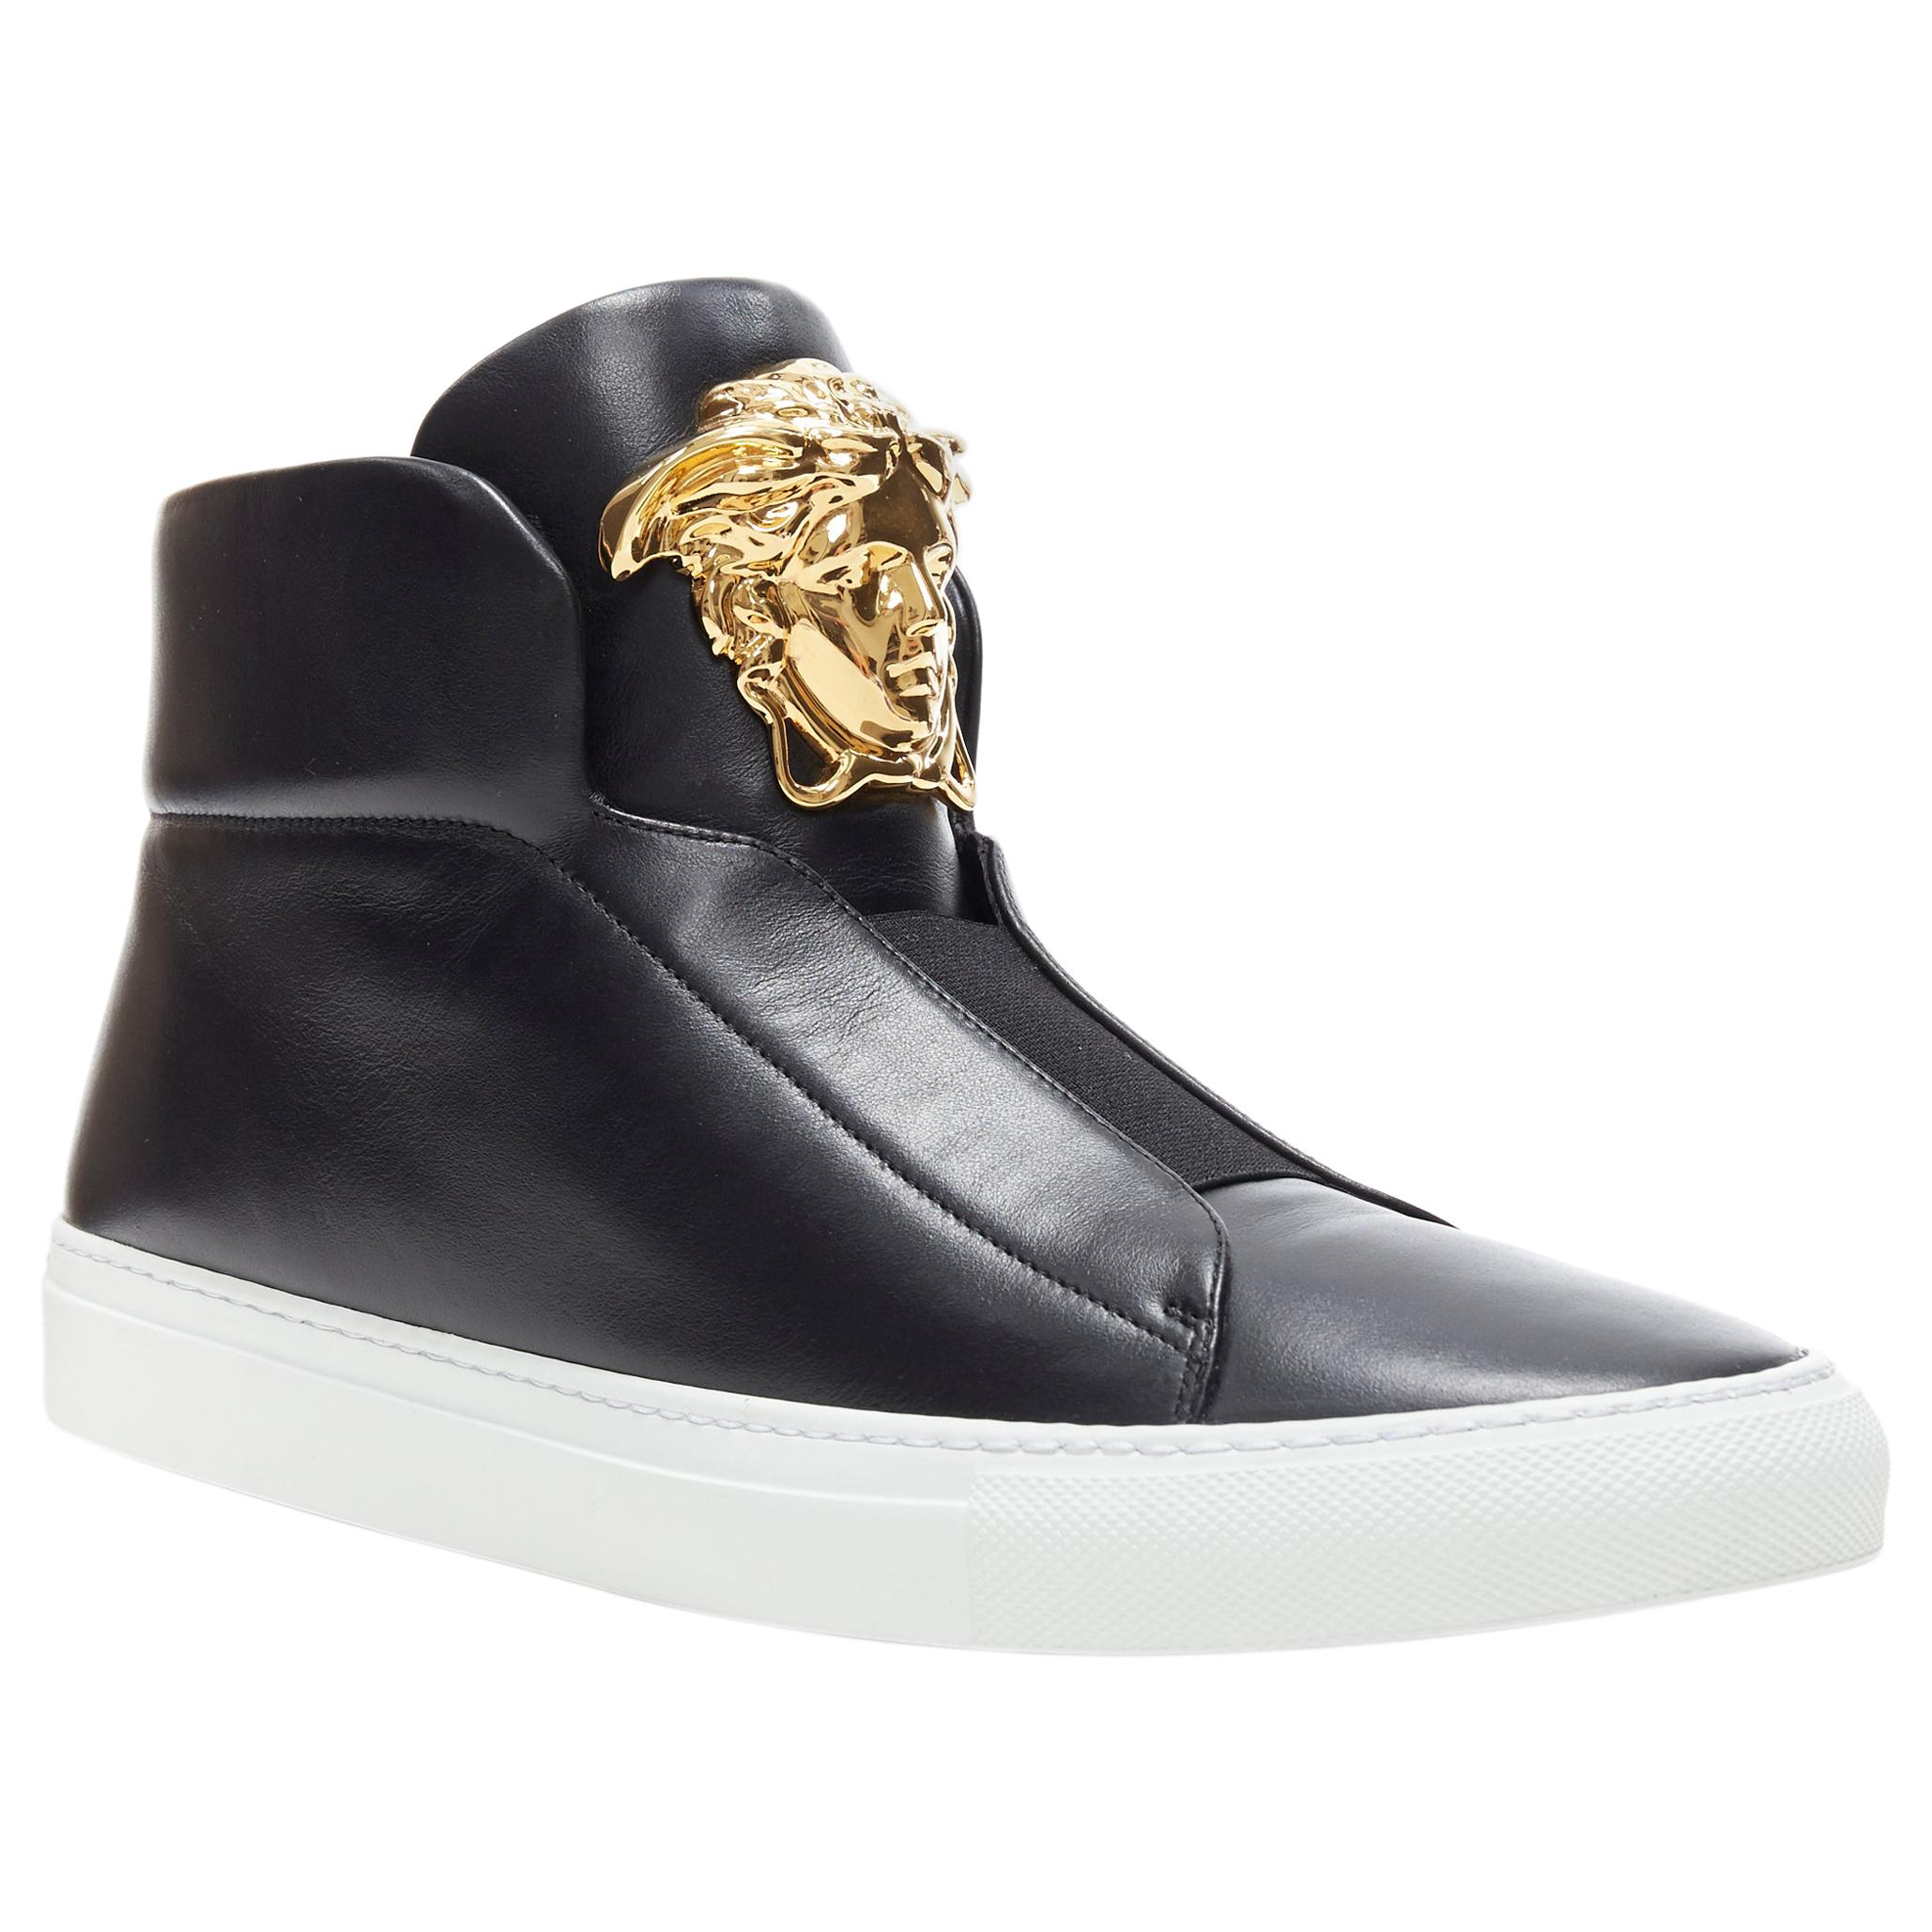 new VERSACE Palazzo gold Medusa black calfskin leather high top sneaker EU41